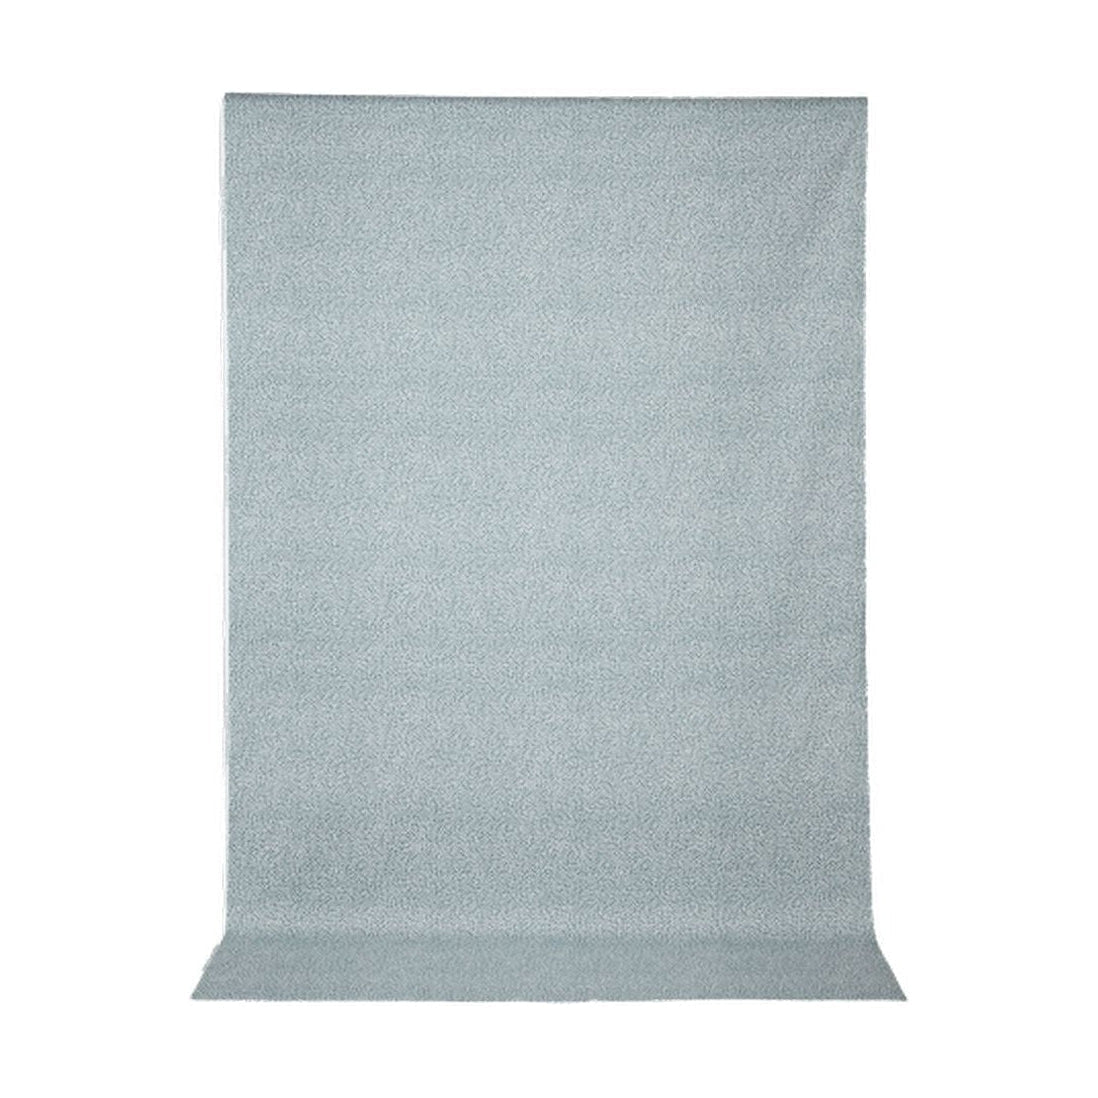 Spira dotte stofbreedte 150 cm (prijs per meter), blauw gerookt